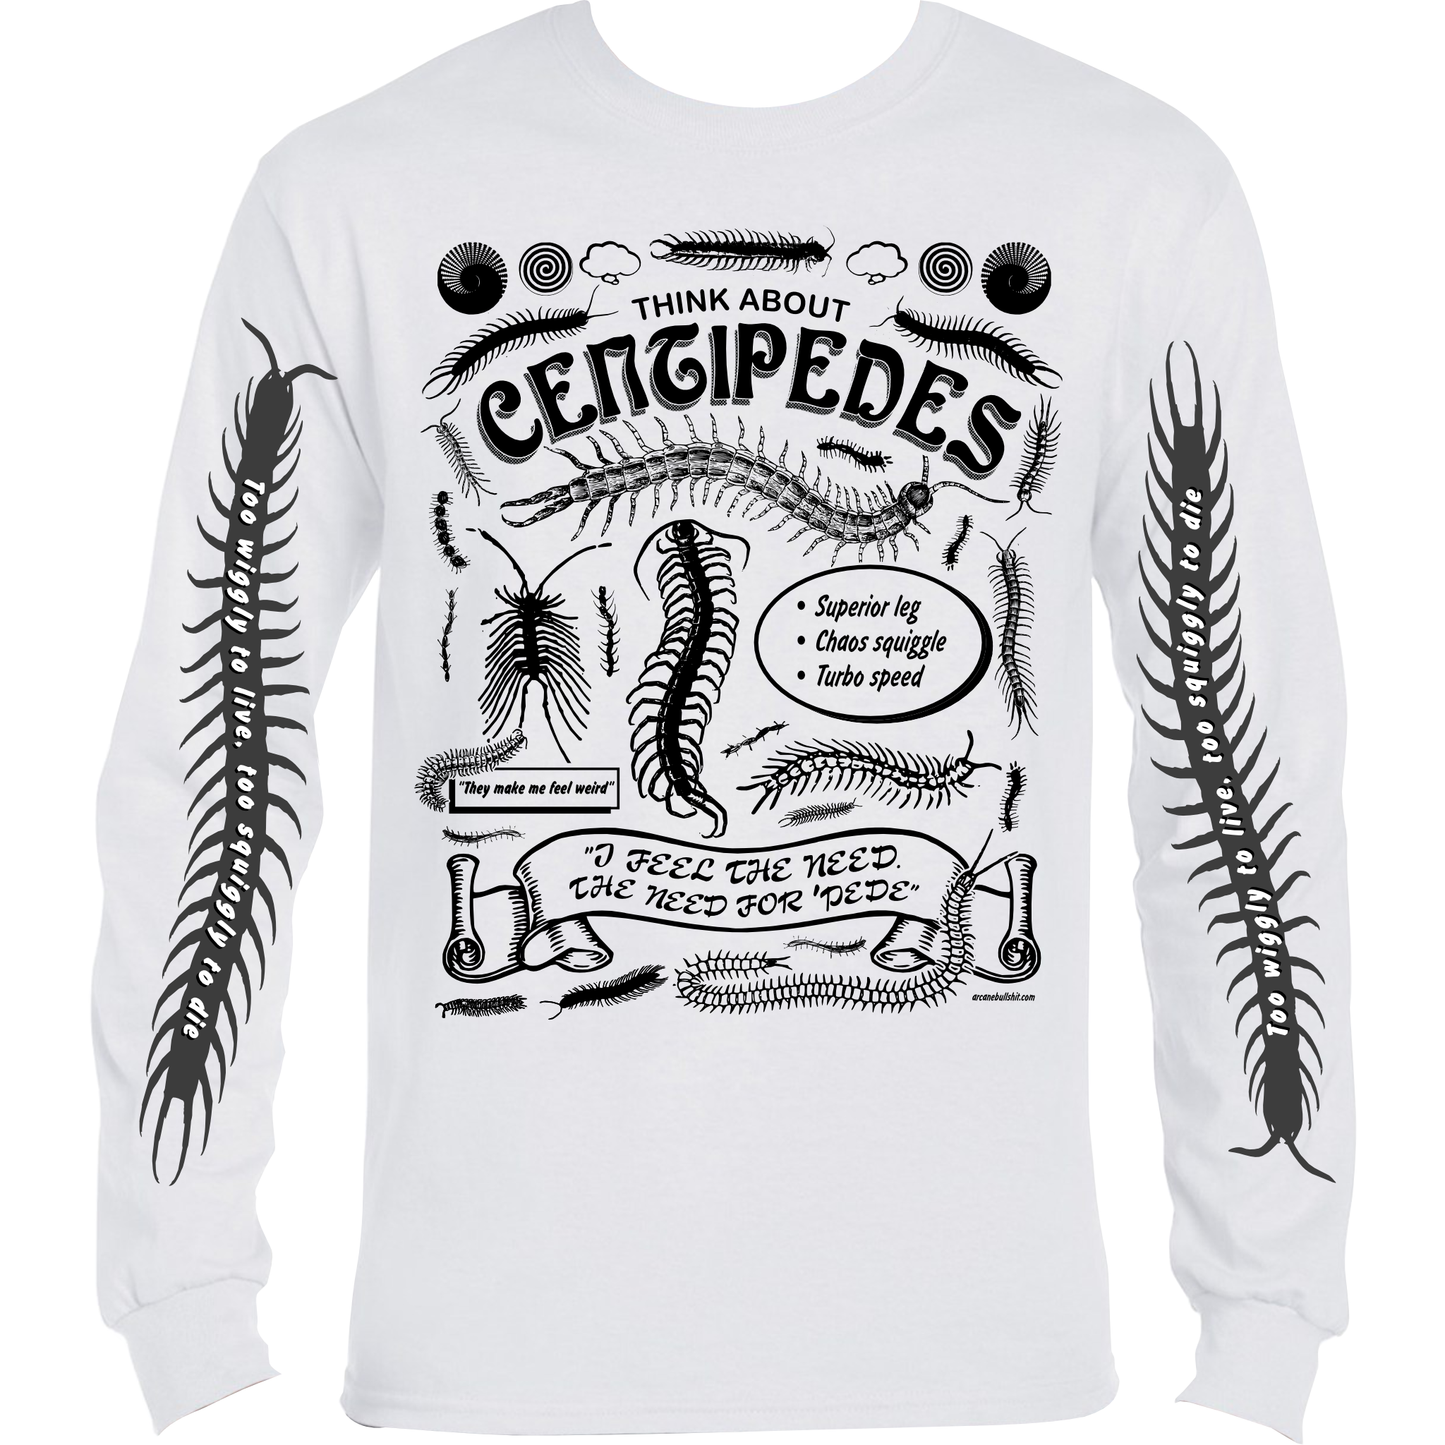 "Centipede" Long-Sleeved t-shirt